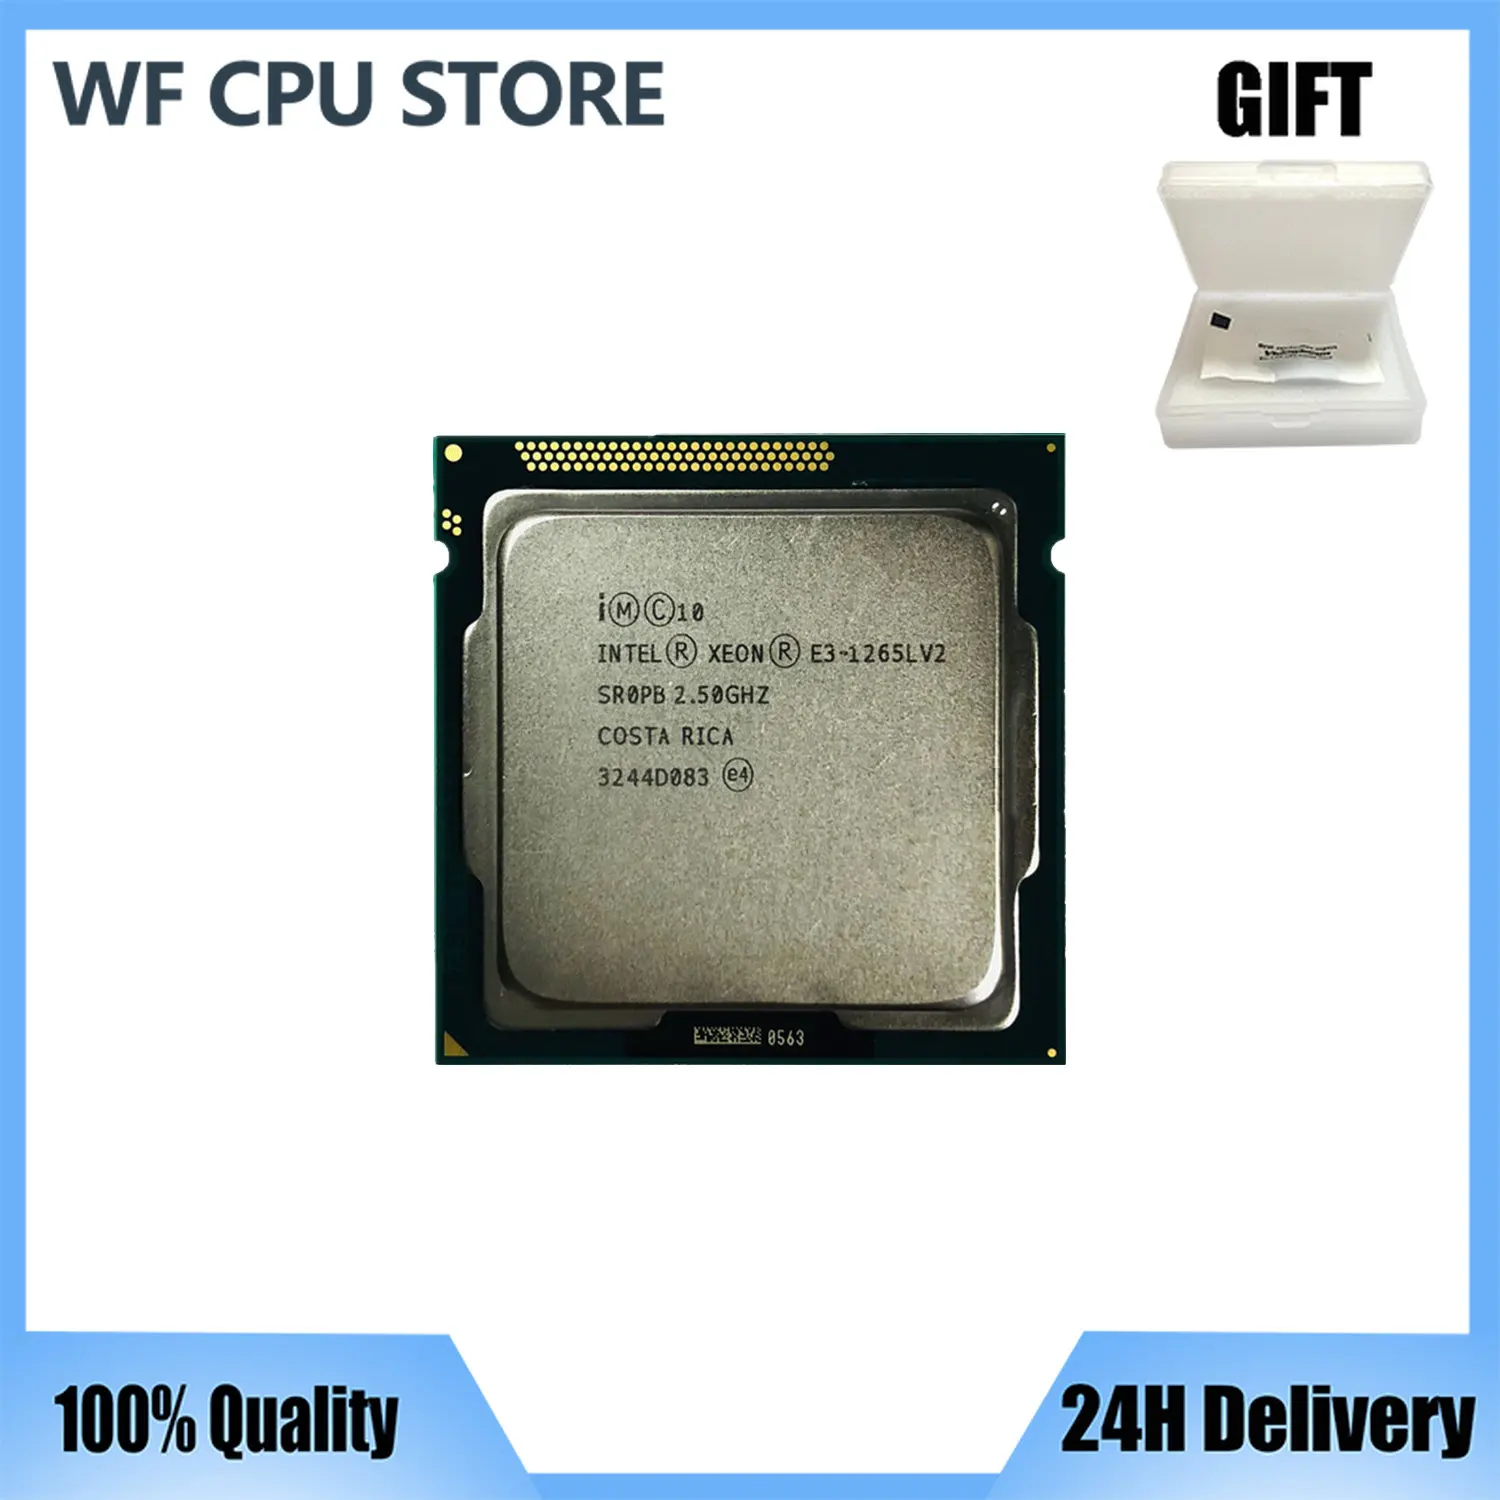 Xeon E3-1265L v2 E3 1265Lv2 E3 1265L v2 2.5 GHz Quad-Core Eight-Core 45W CPU Processor LGA 1155